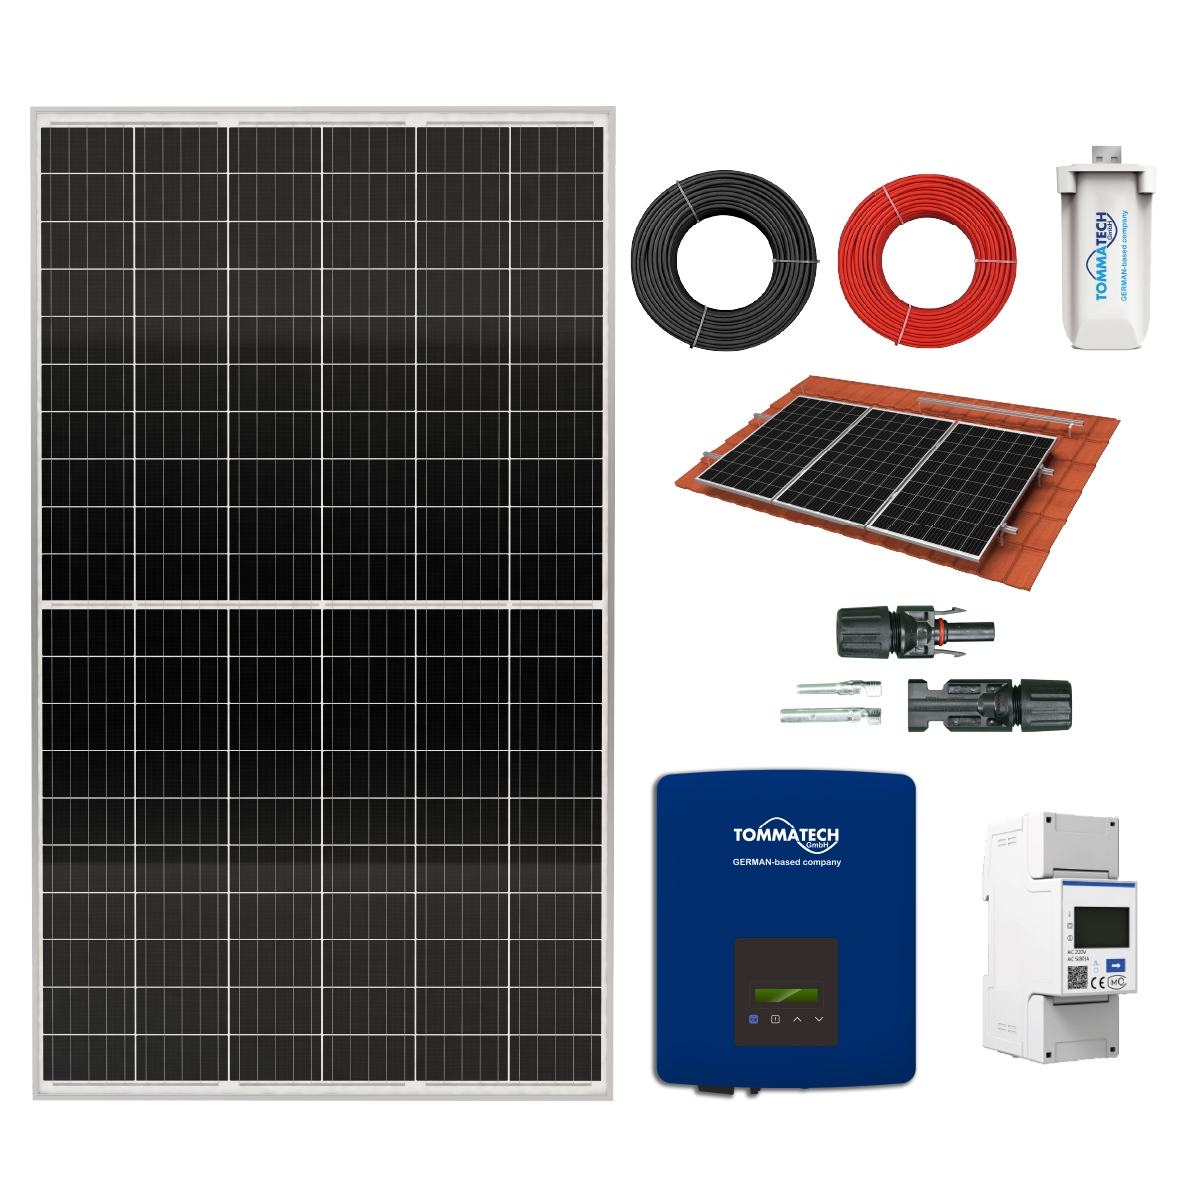 1.1kW / 1.52kWp Solar On-Grid Plug & Play Solution